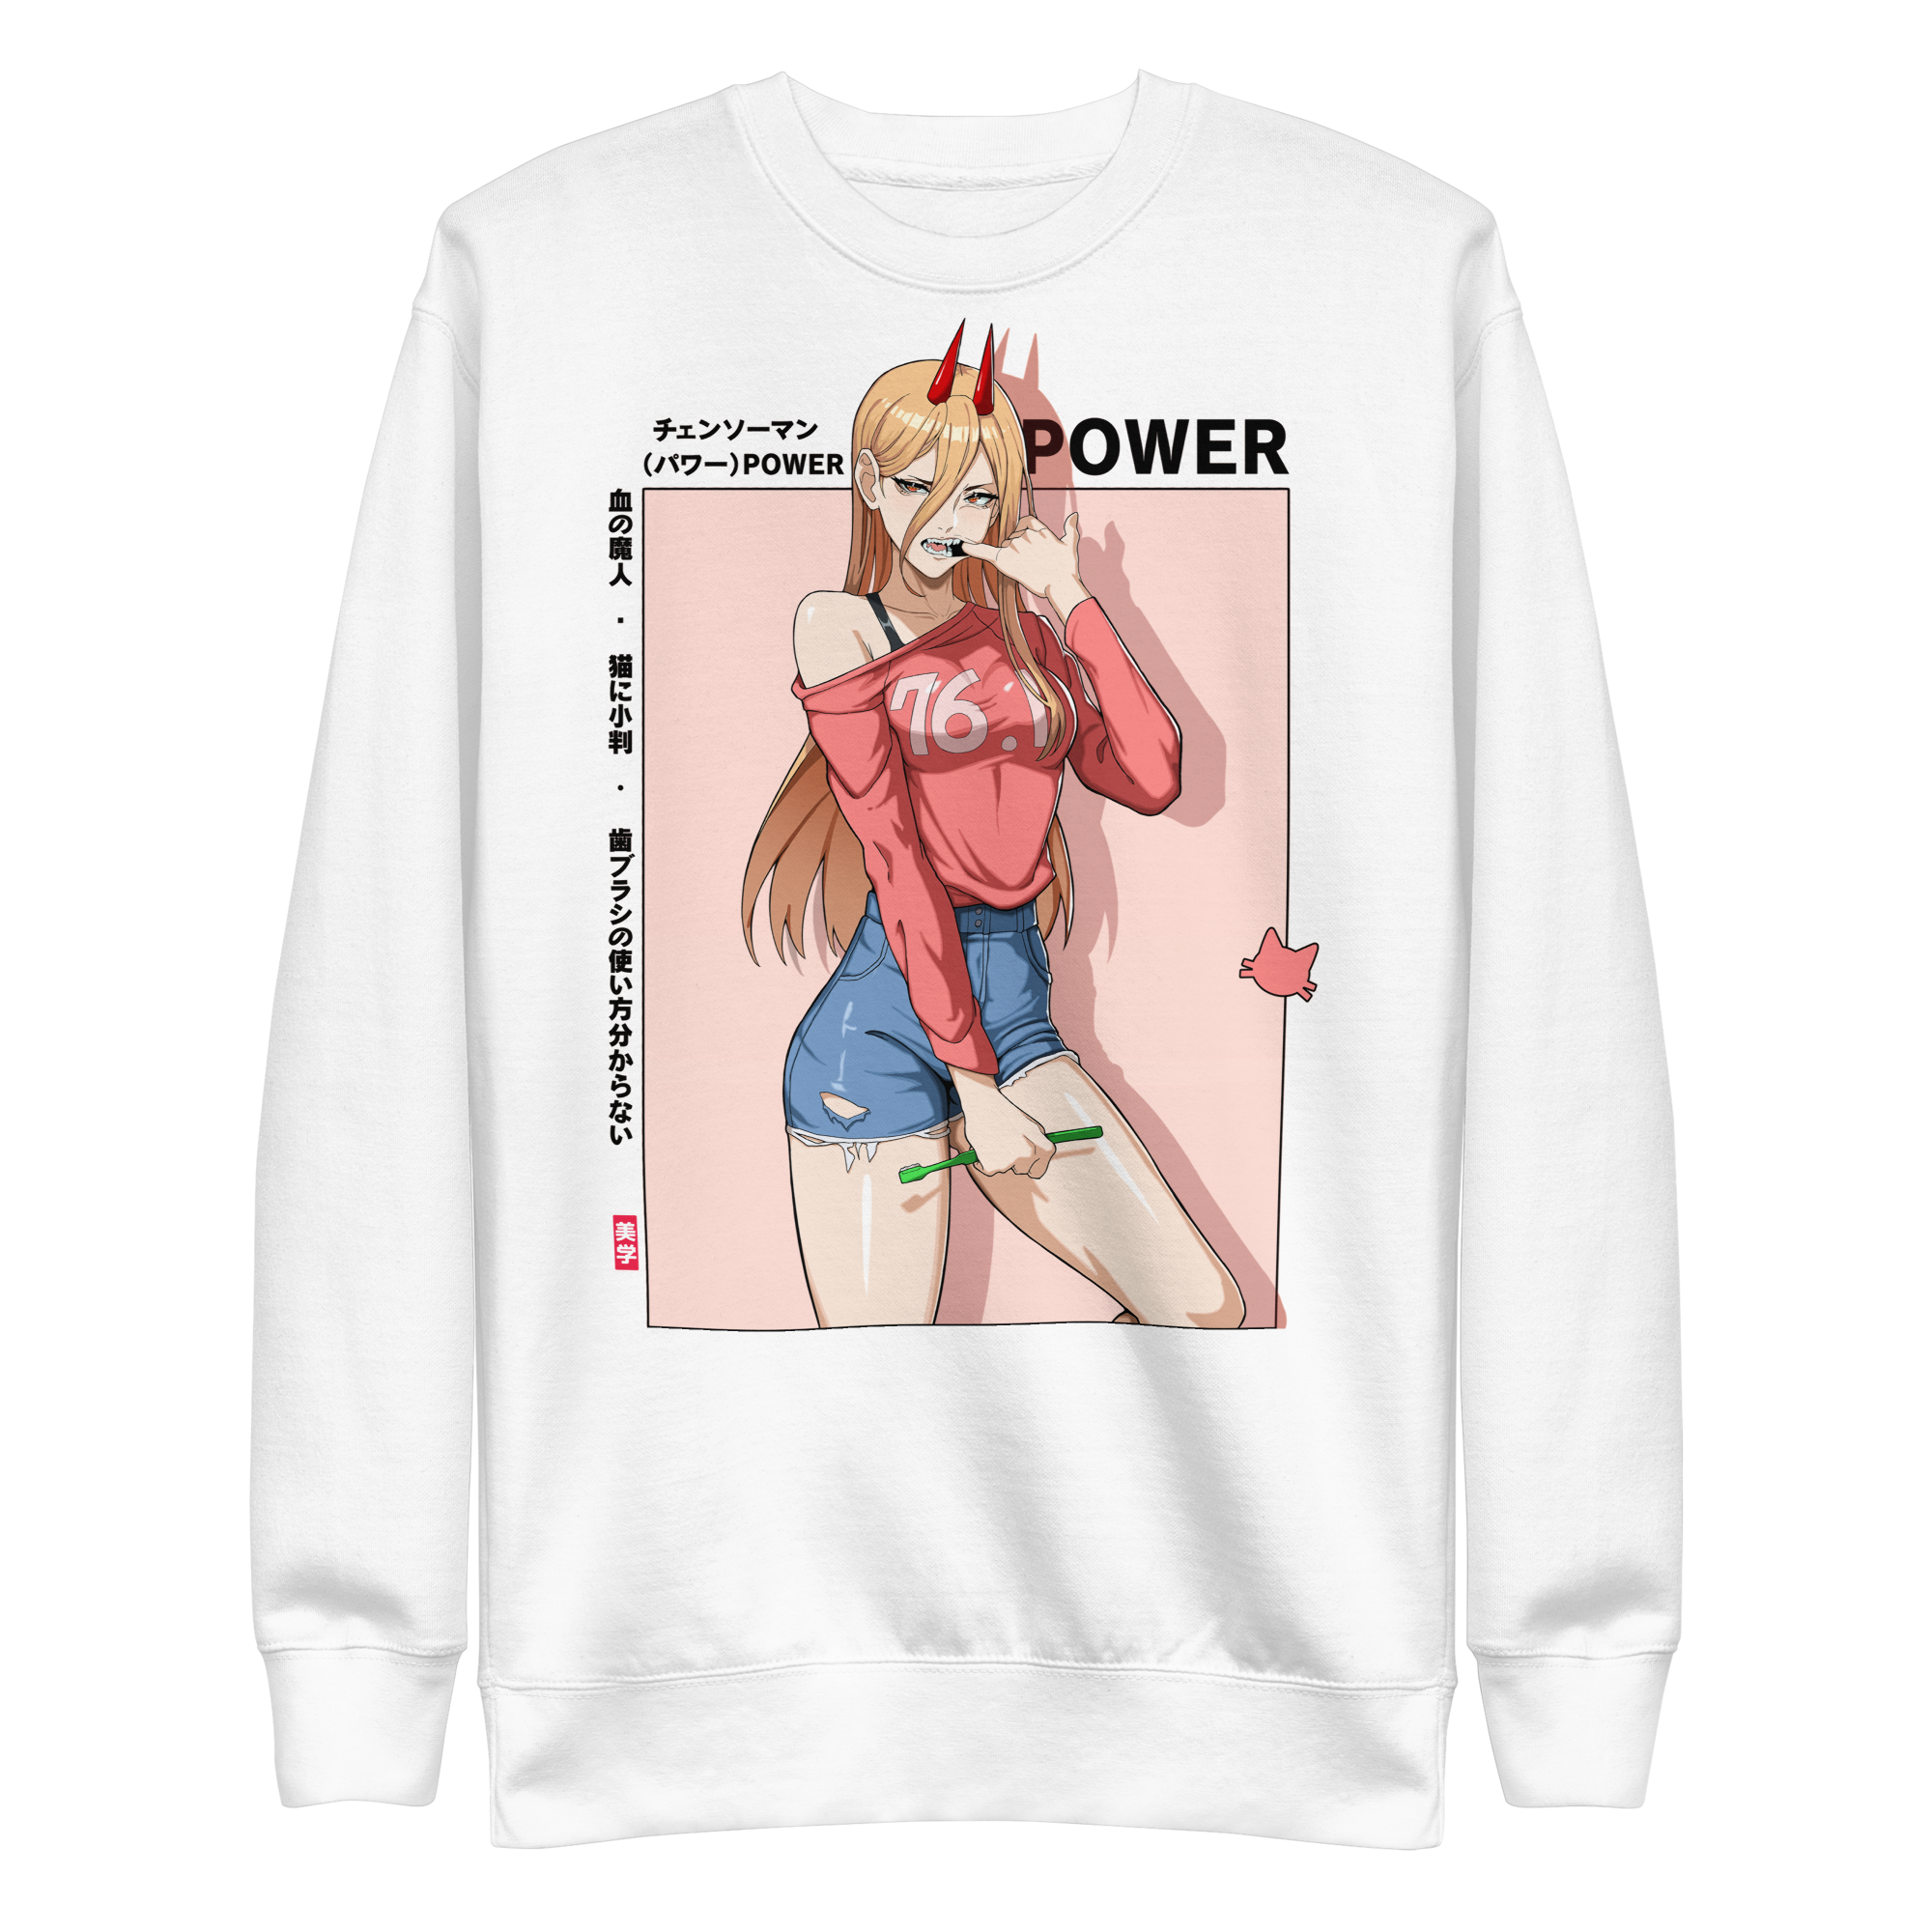 Power (Toothbrush) - Sweater